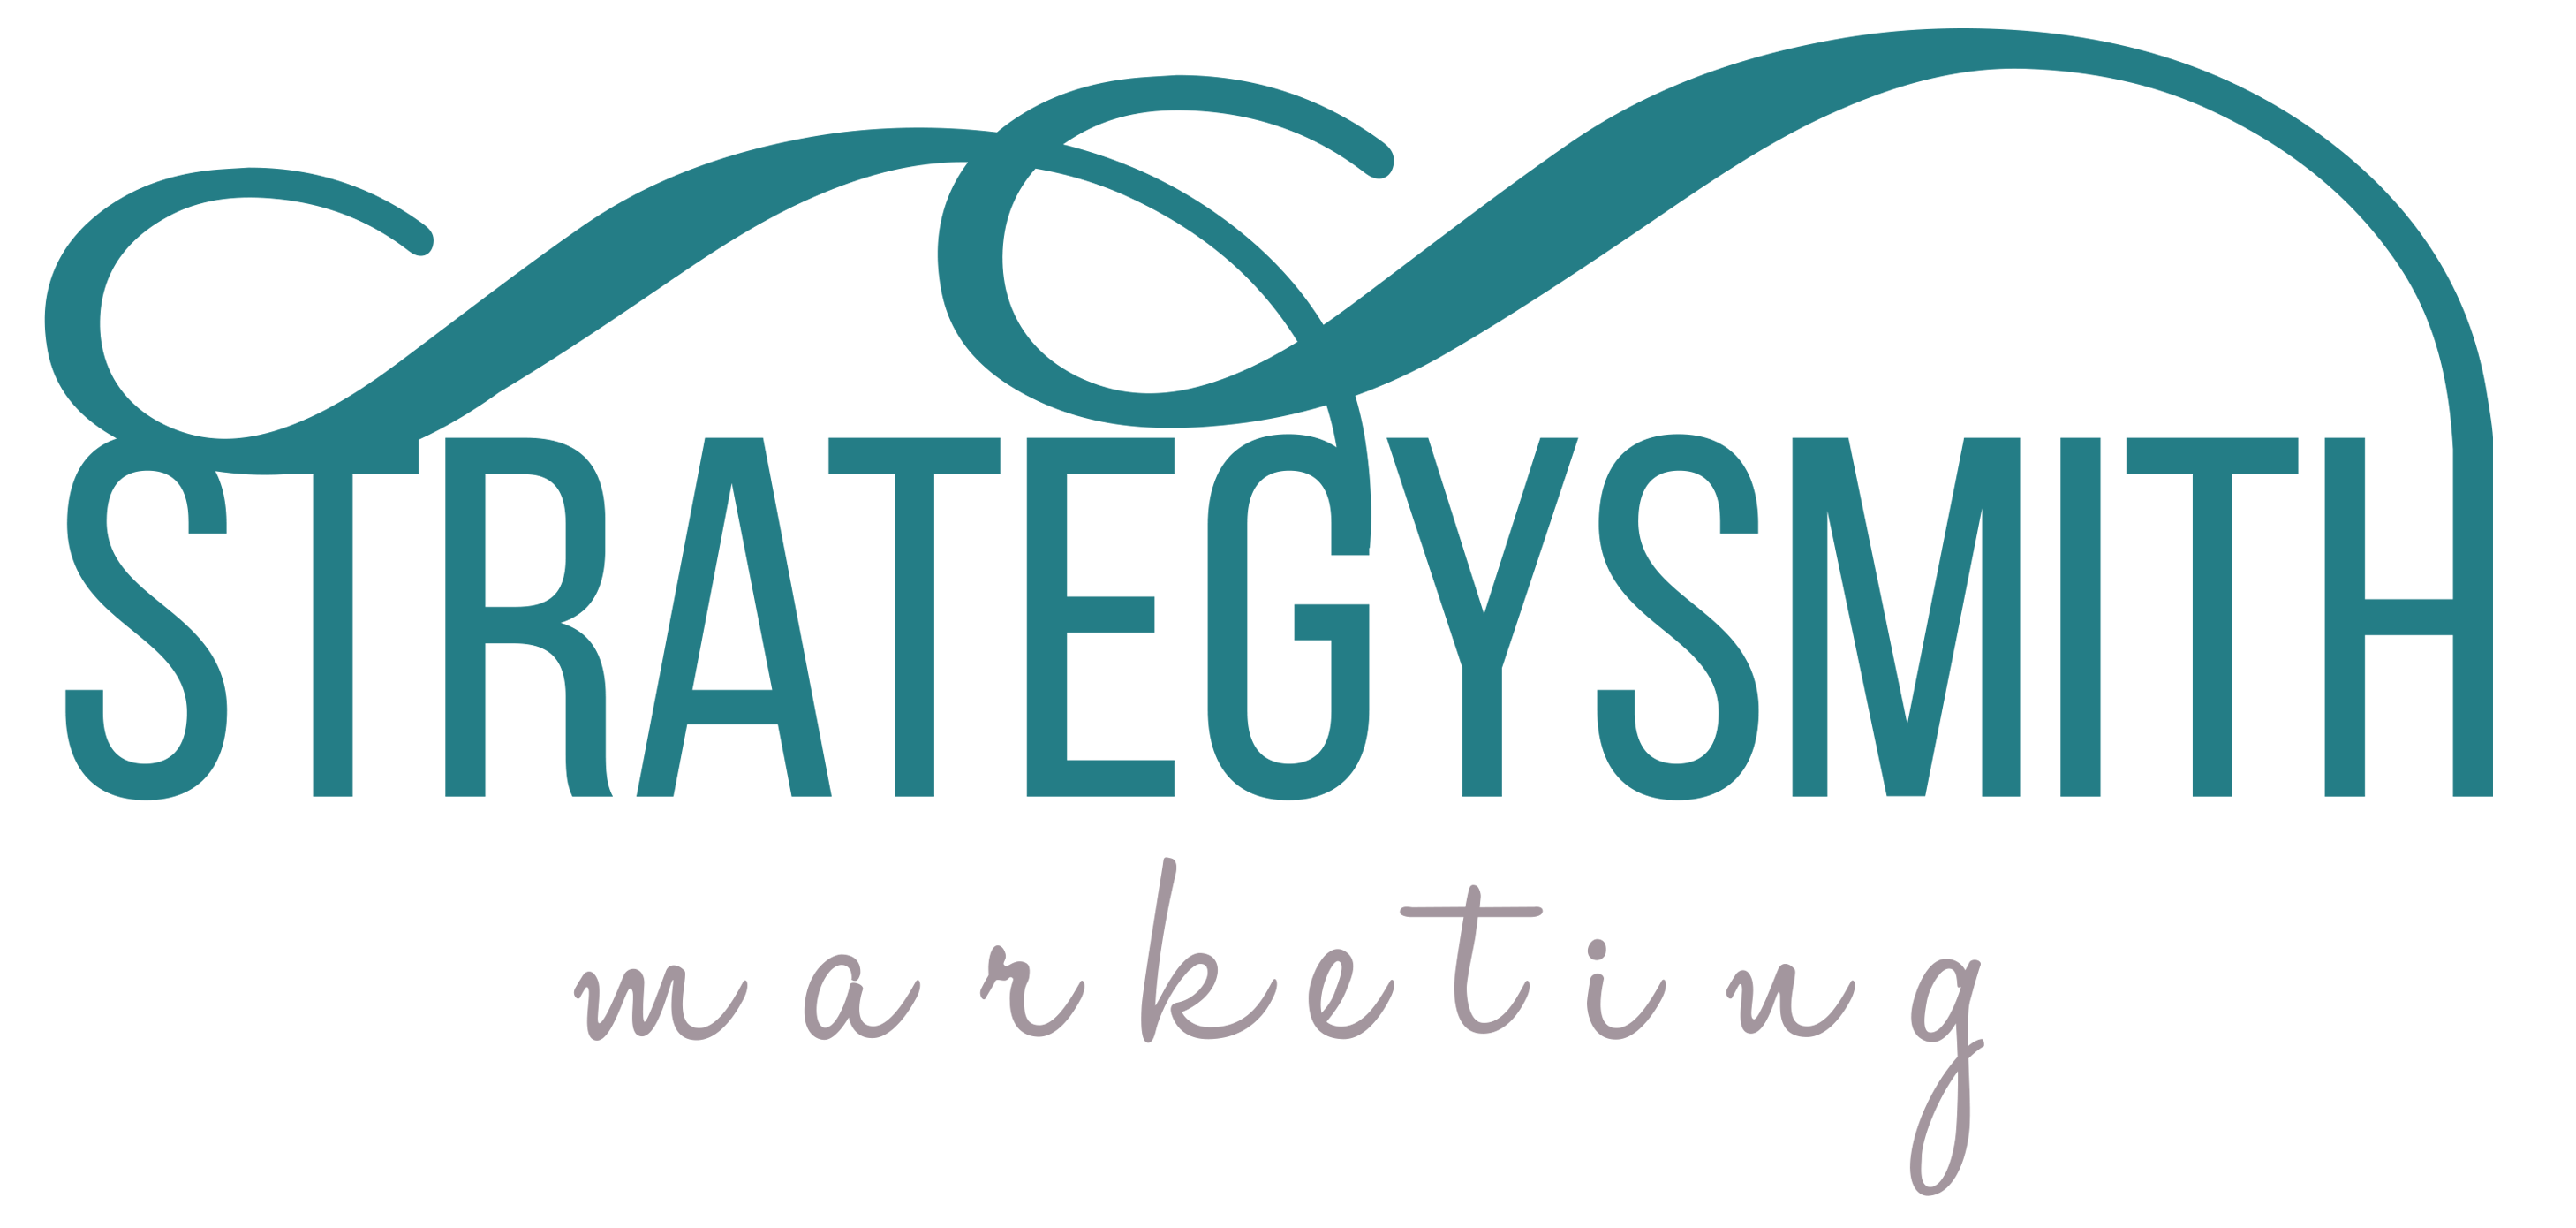 strategysmith marketing